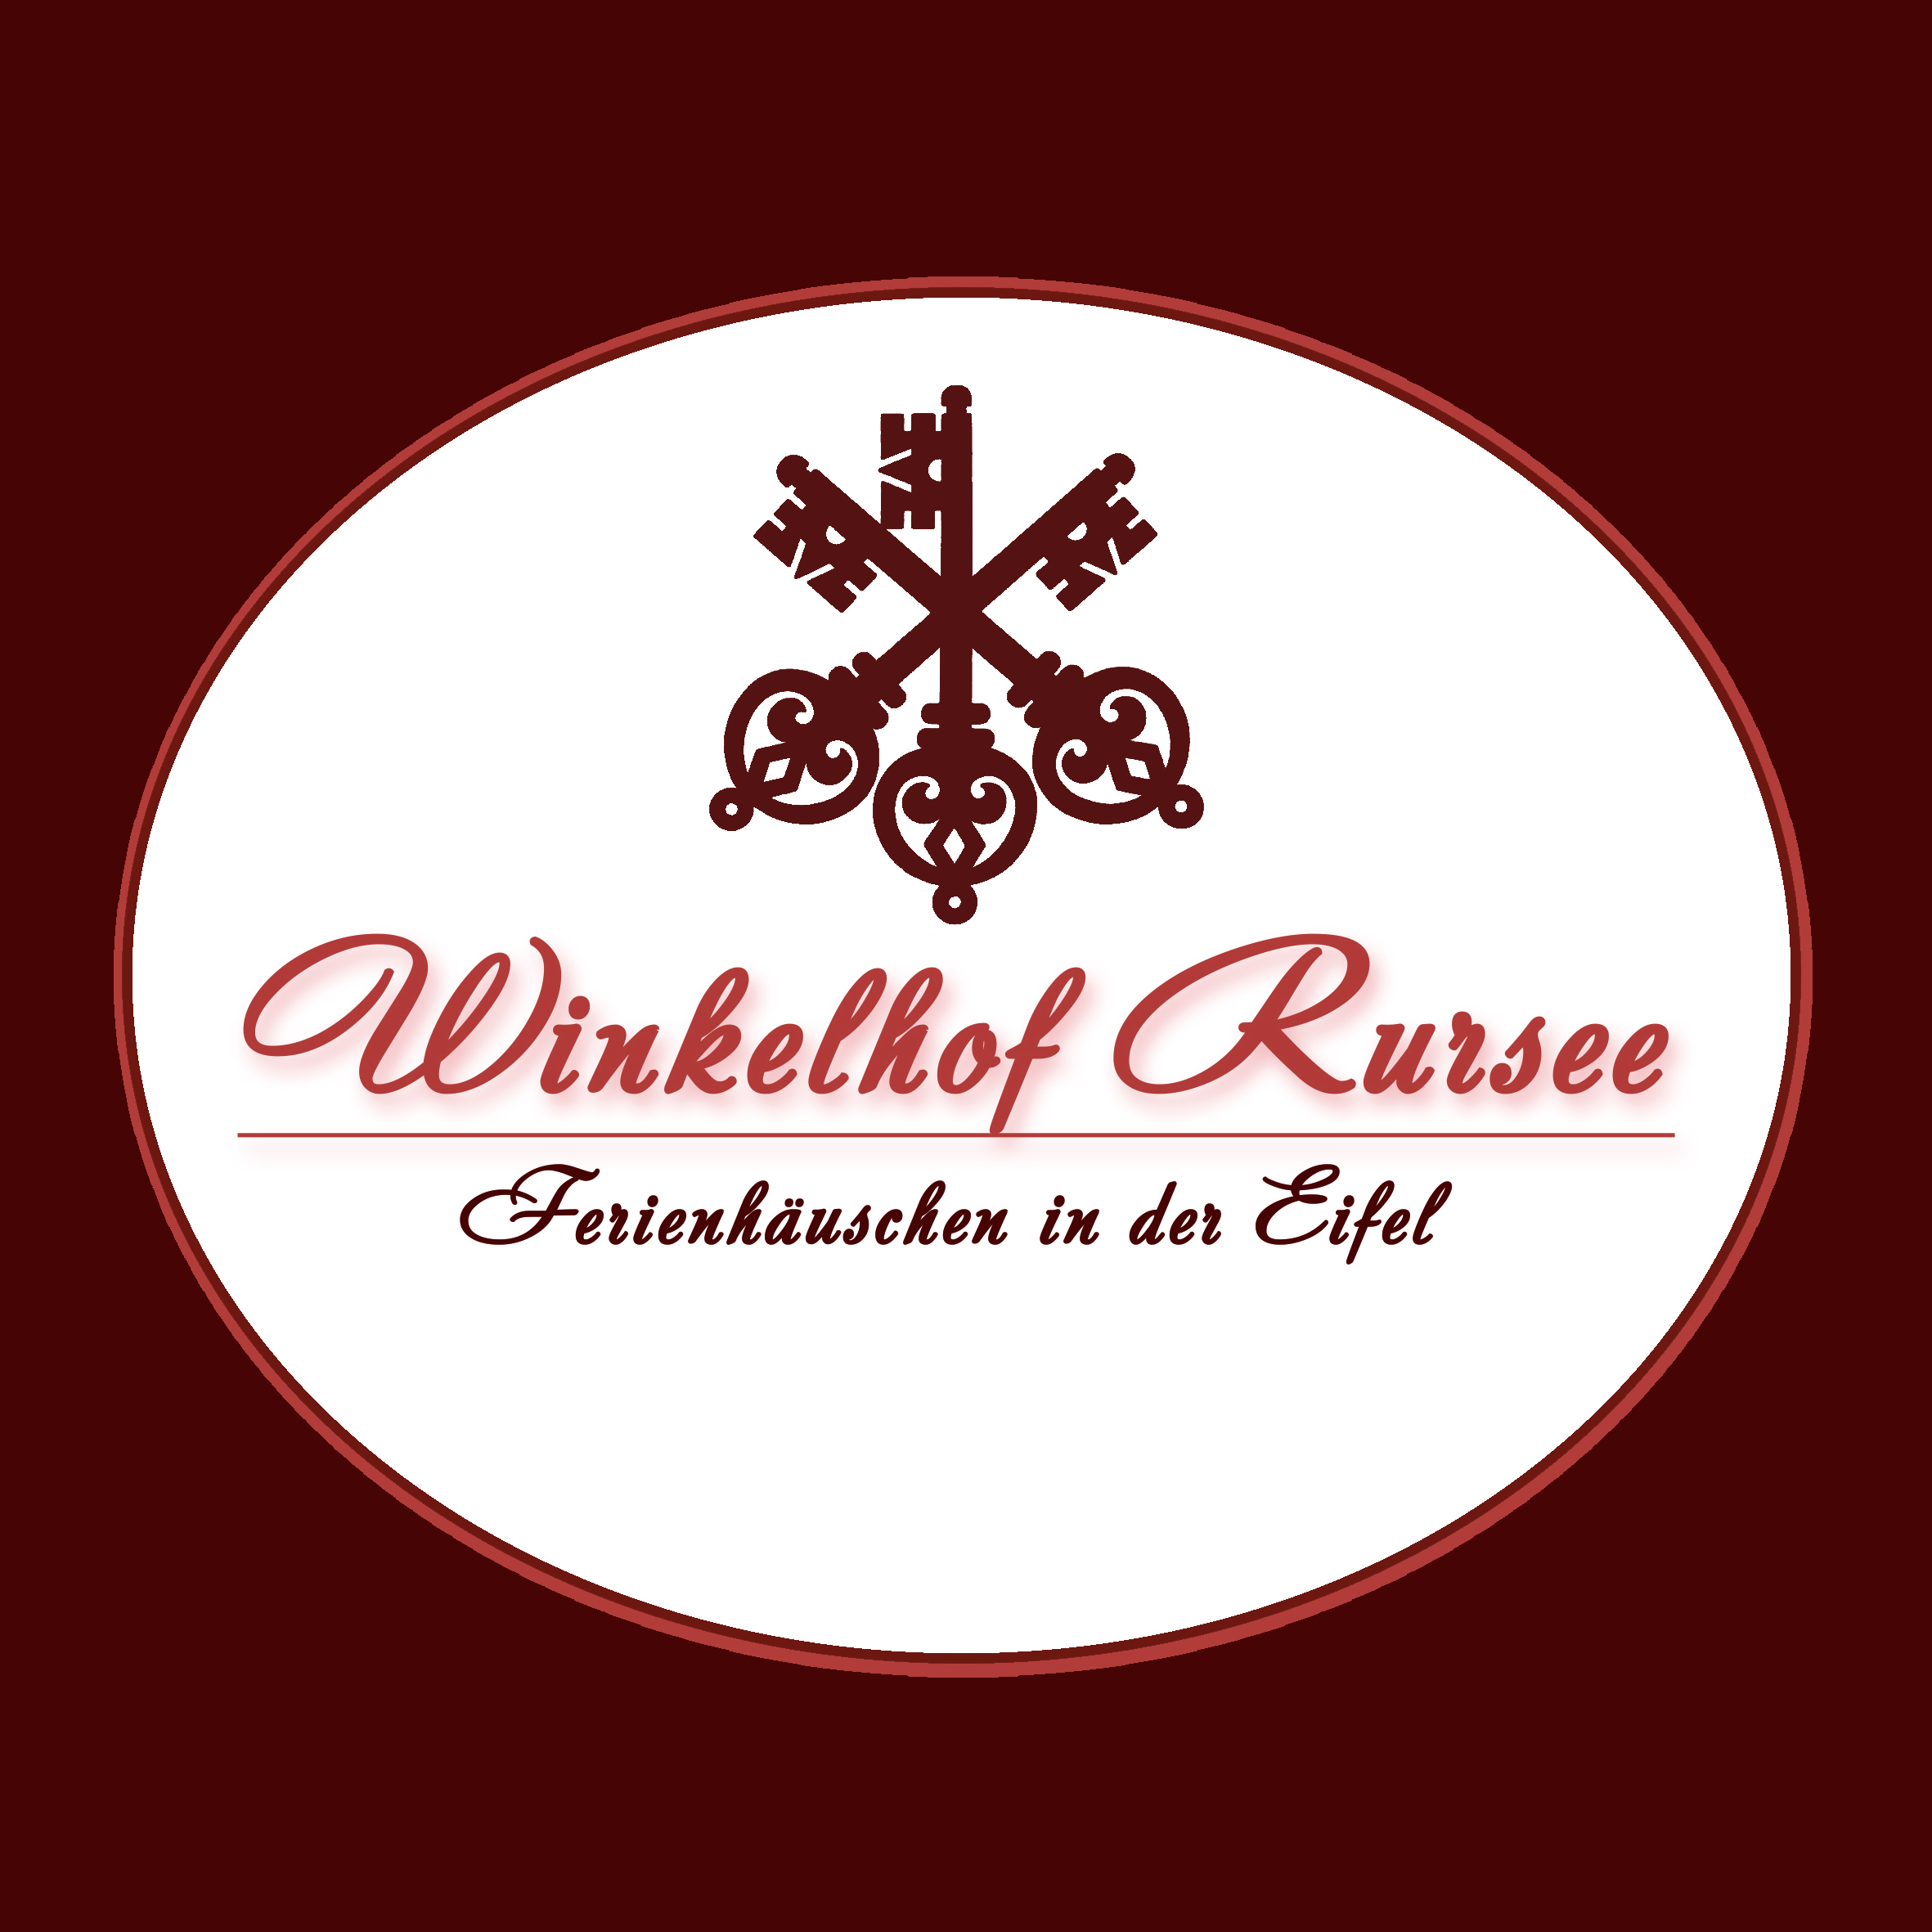 Logo "Winkelhof Rursee"
Ferienhäuser am See in Woffelsbach